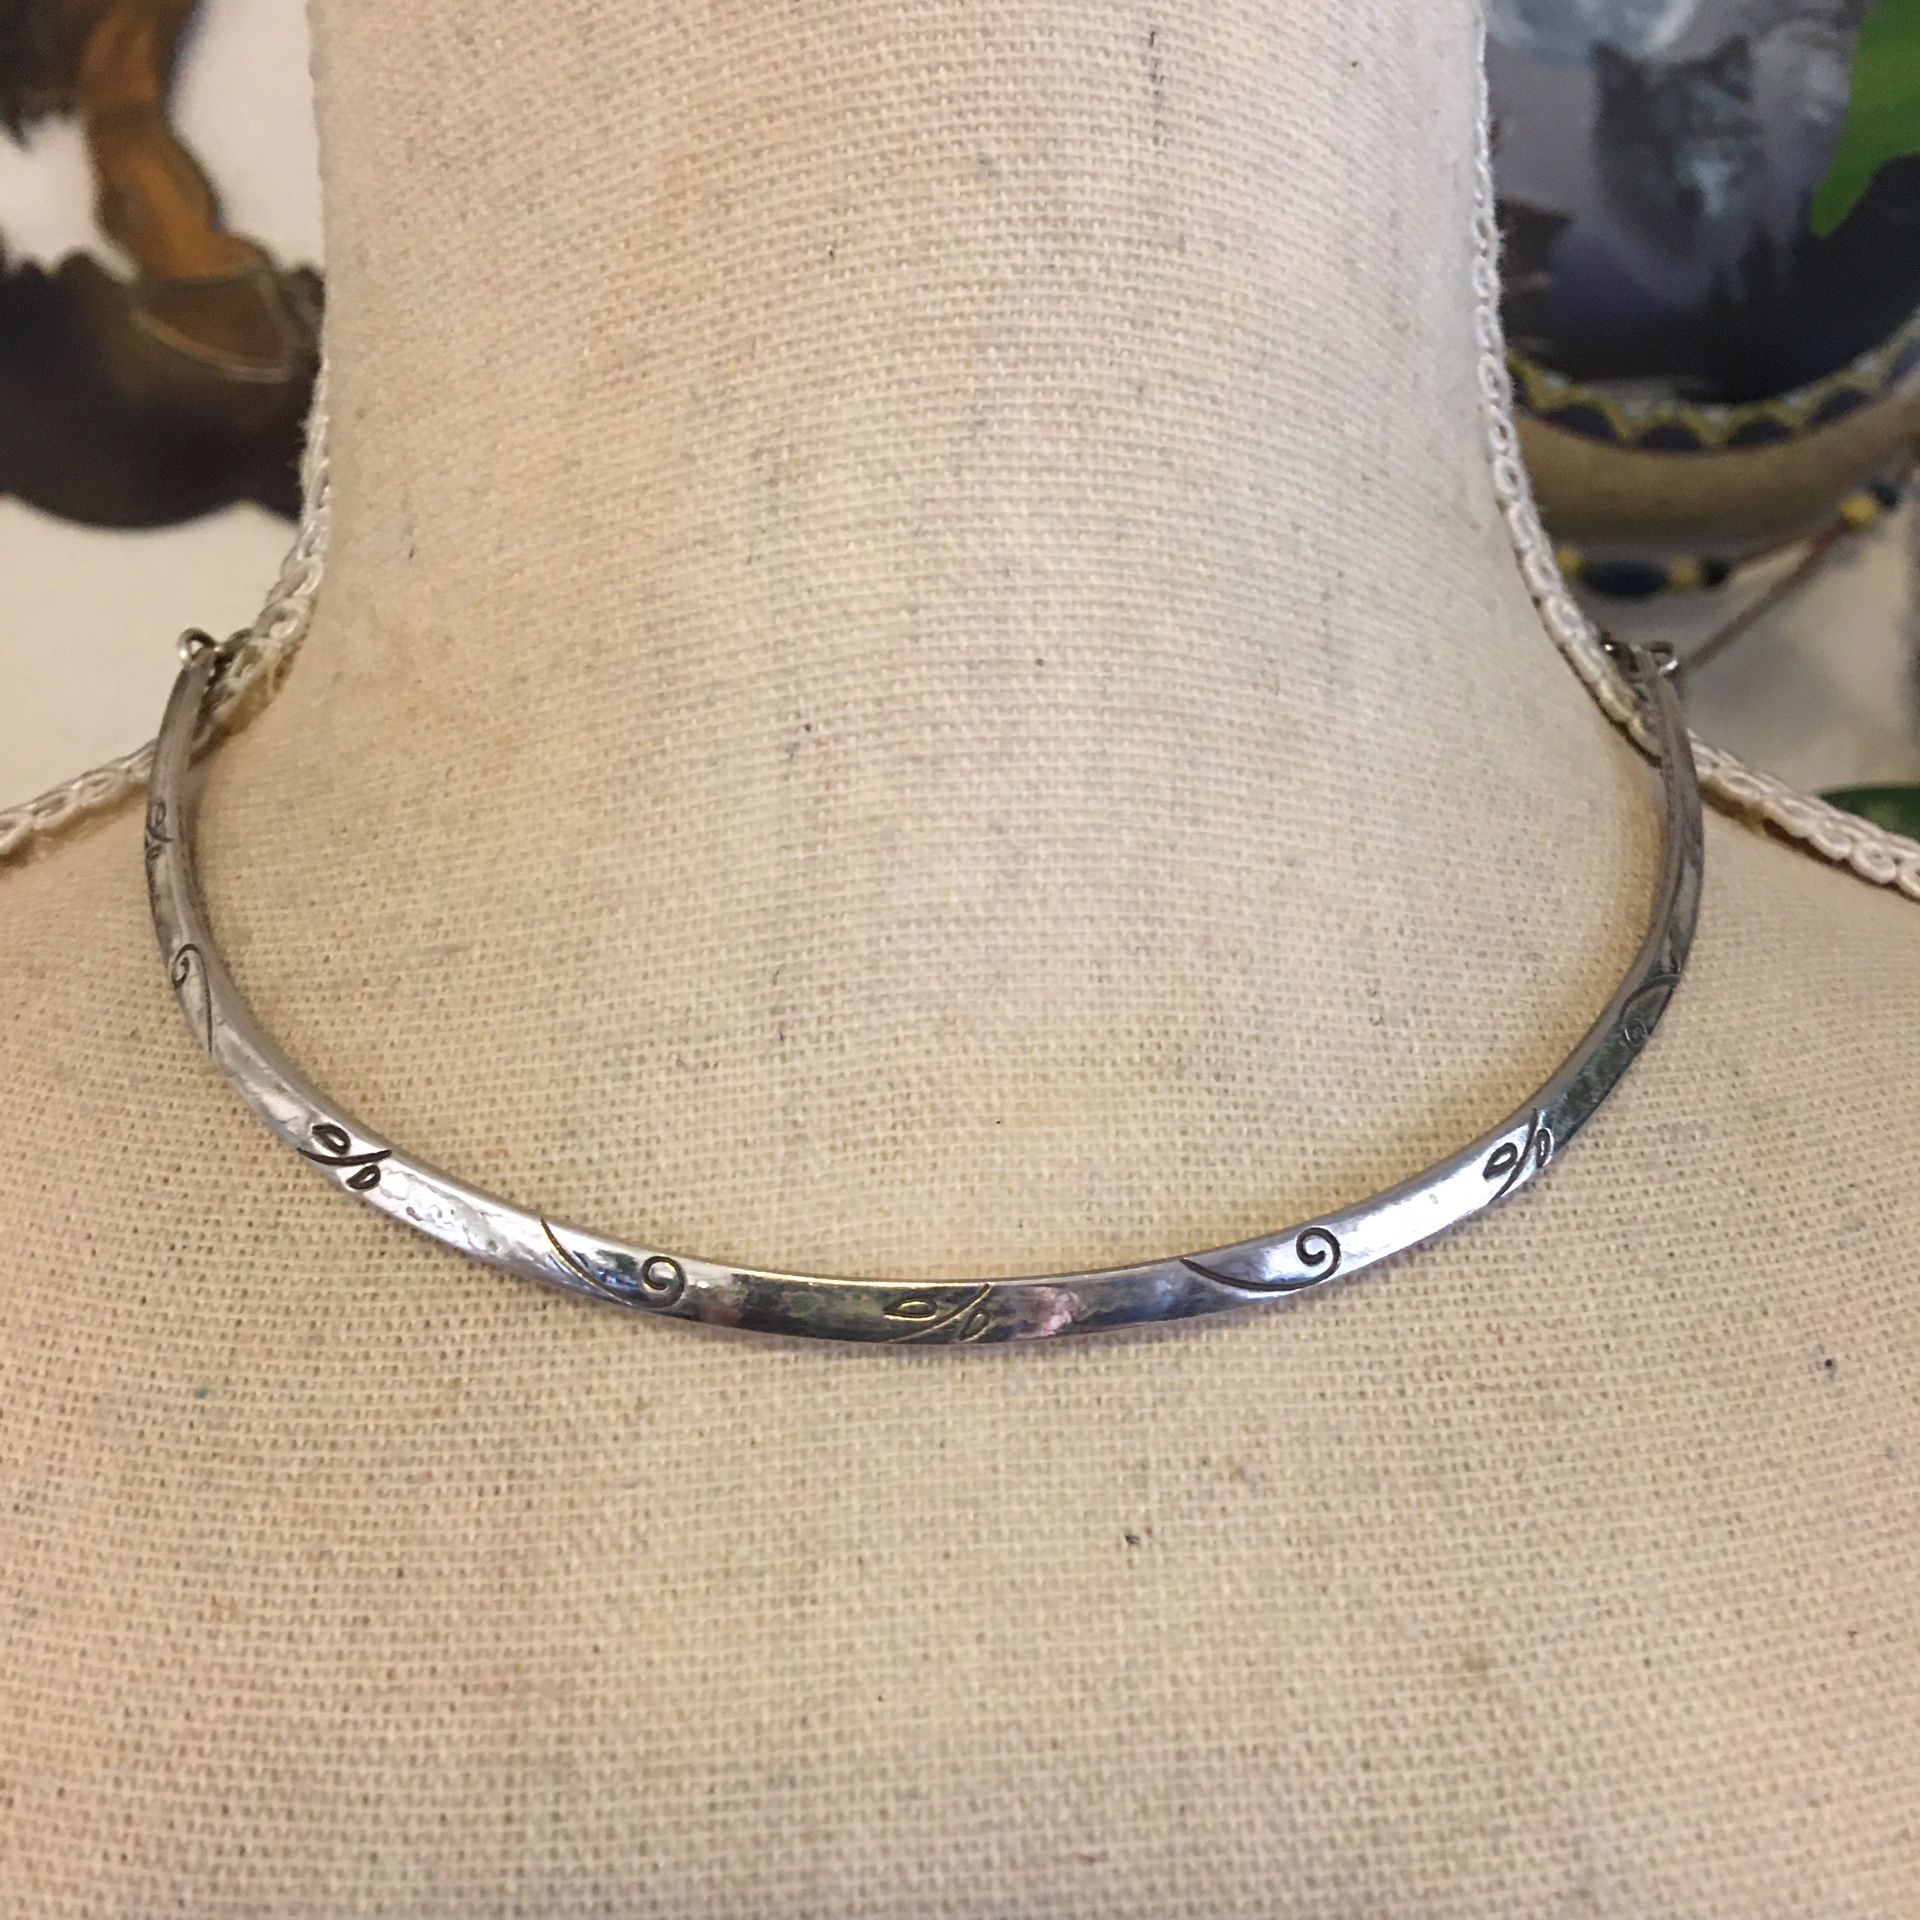 Vintage 90s etched silver bar choker necklace